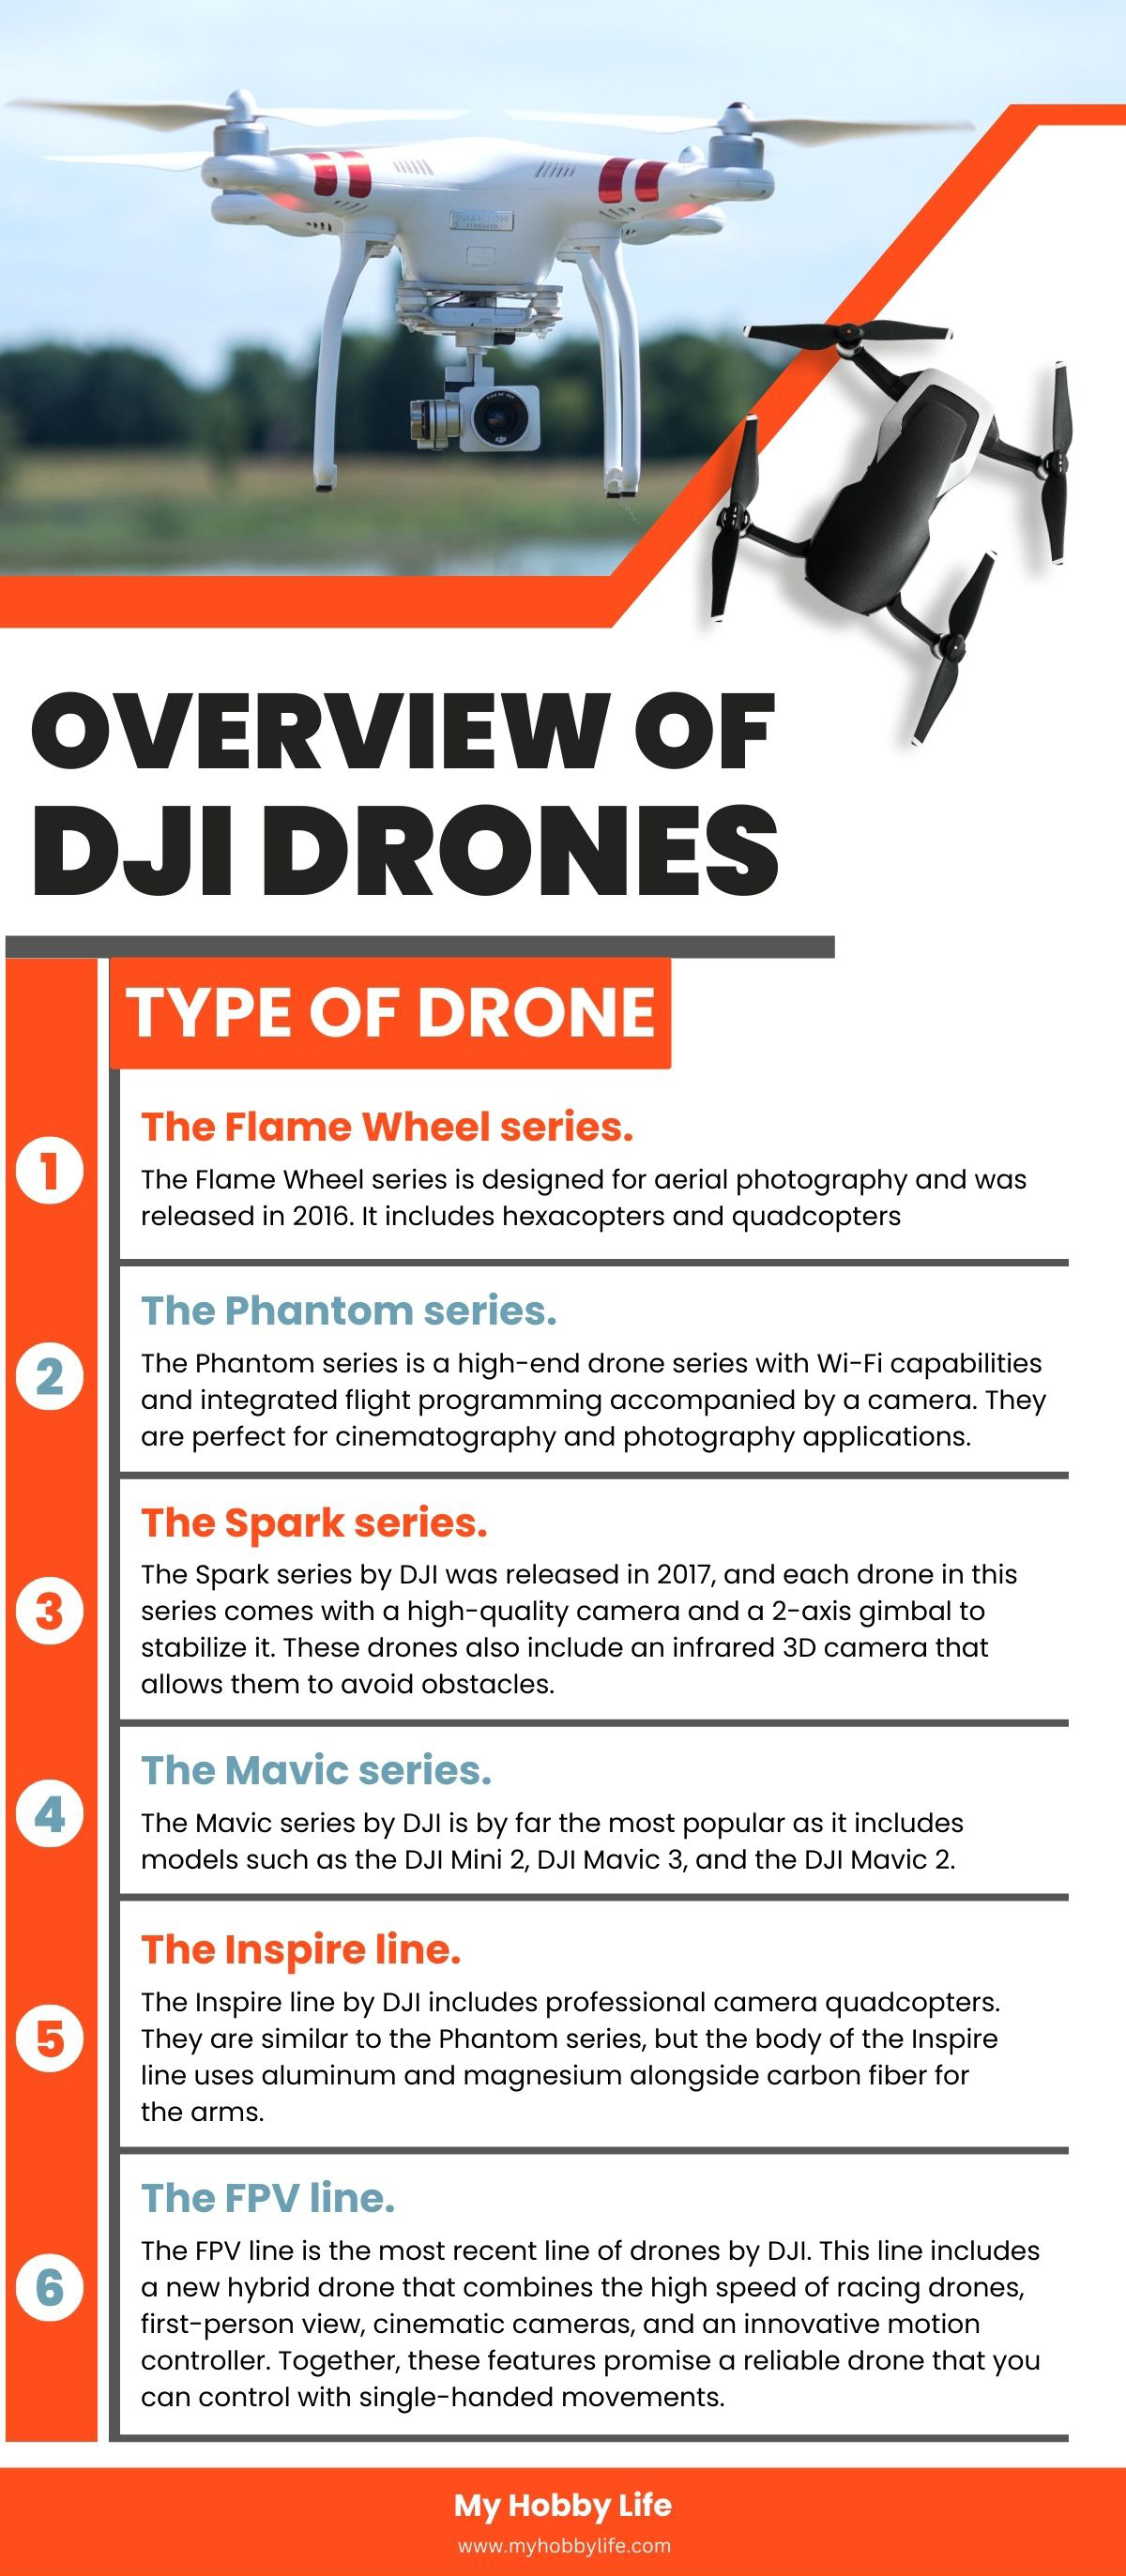 Overview of DJI drones